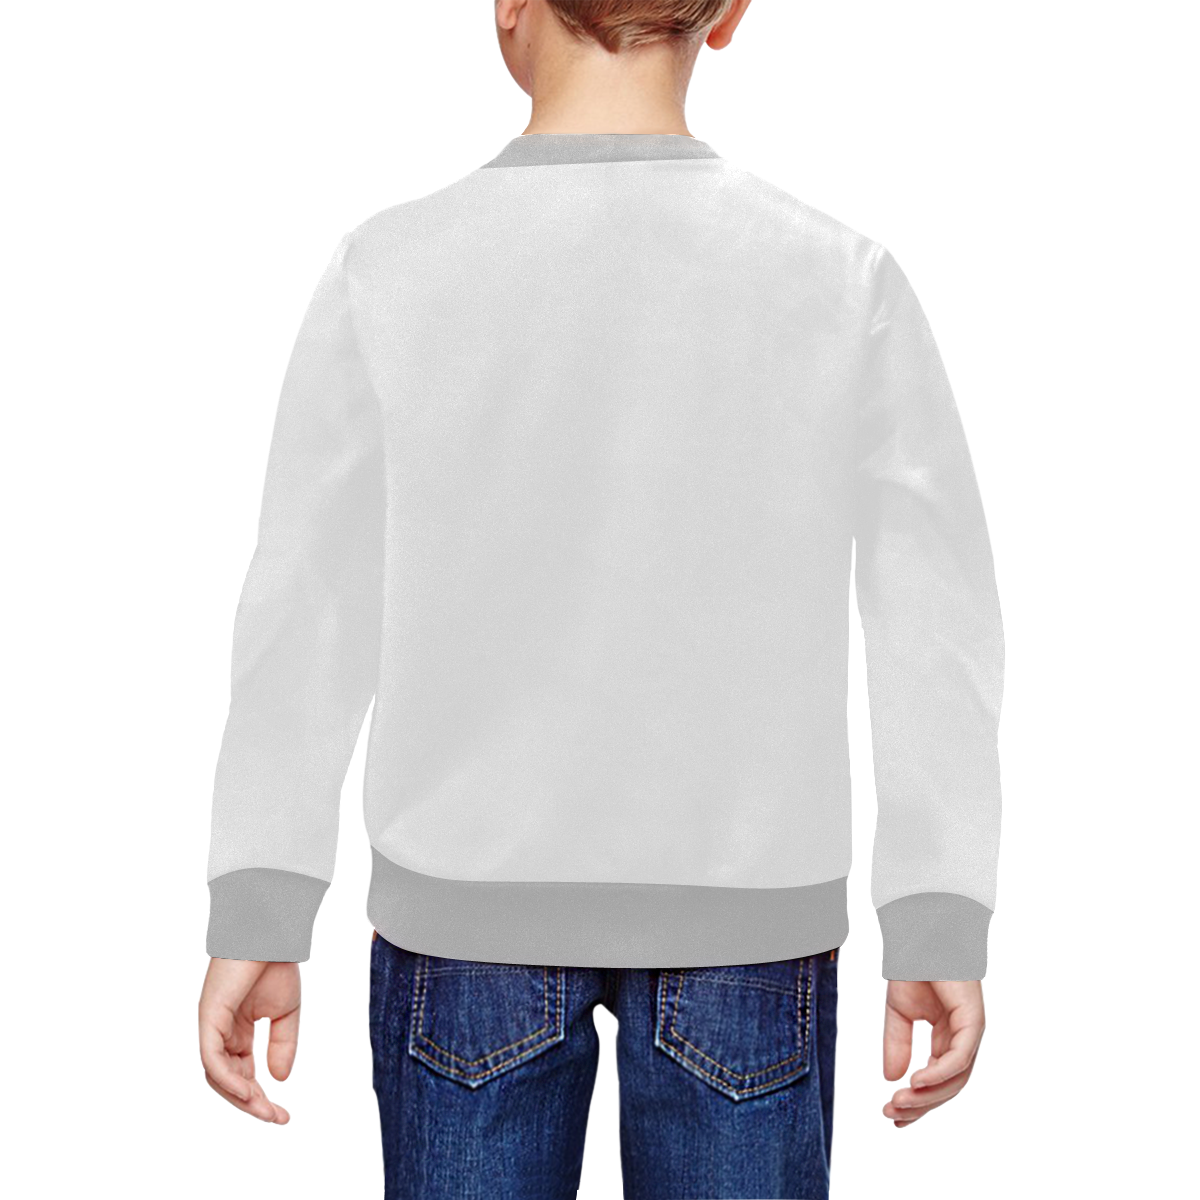 All Over Print Crewneck Sweatshirt for Kids (Model H29)